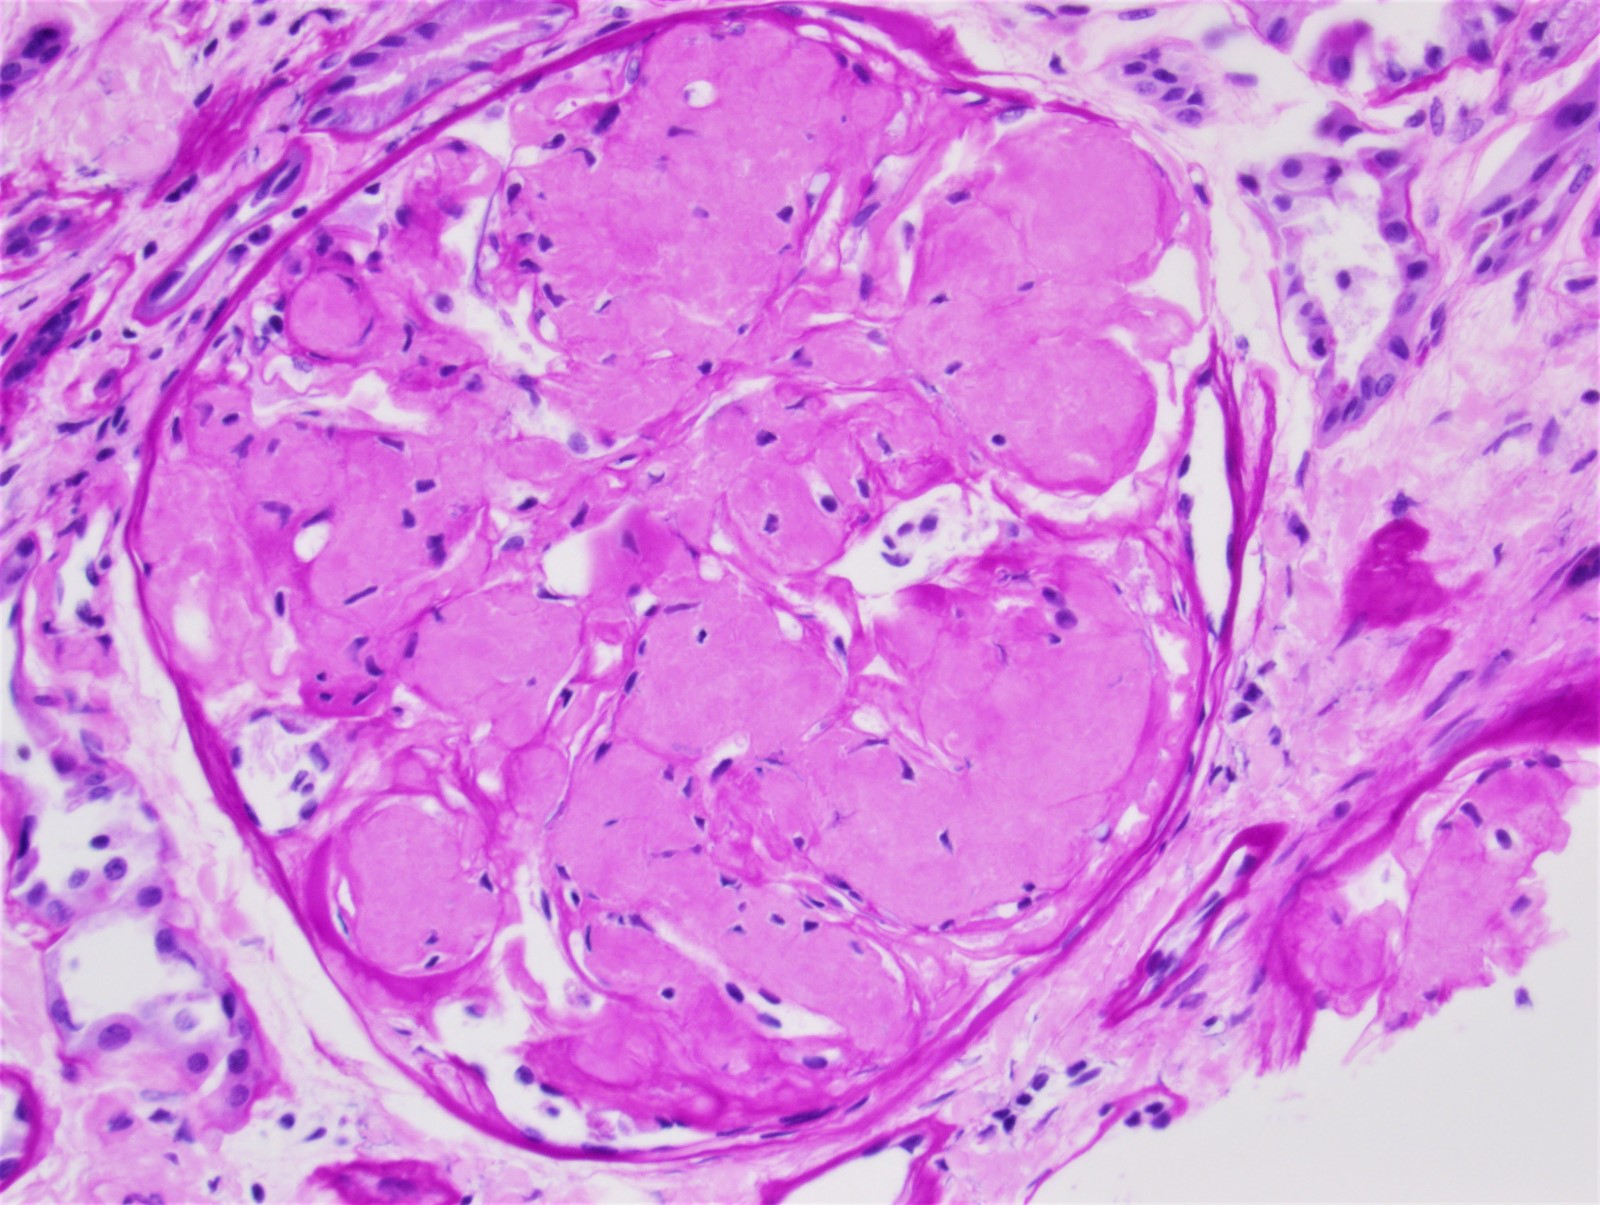 Nodular expansion of mesangium of glomerulus, AL amyloid